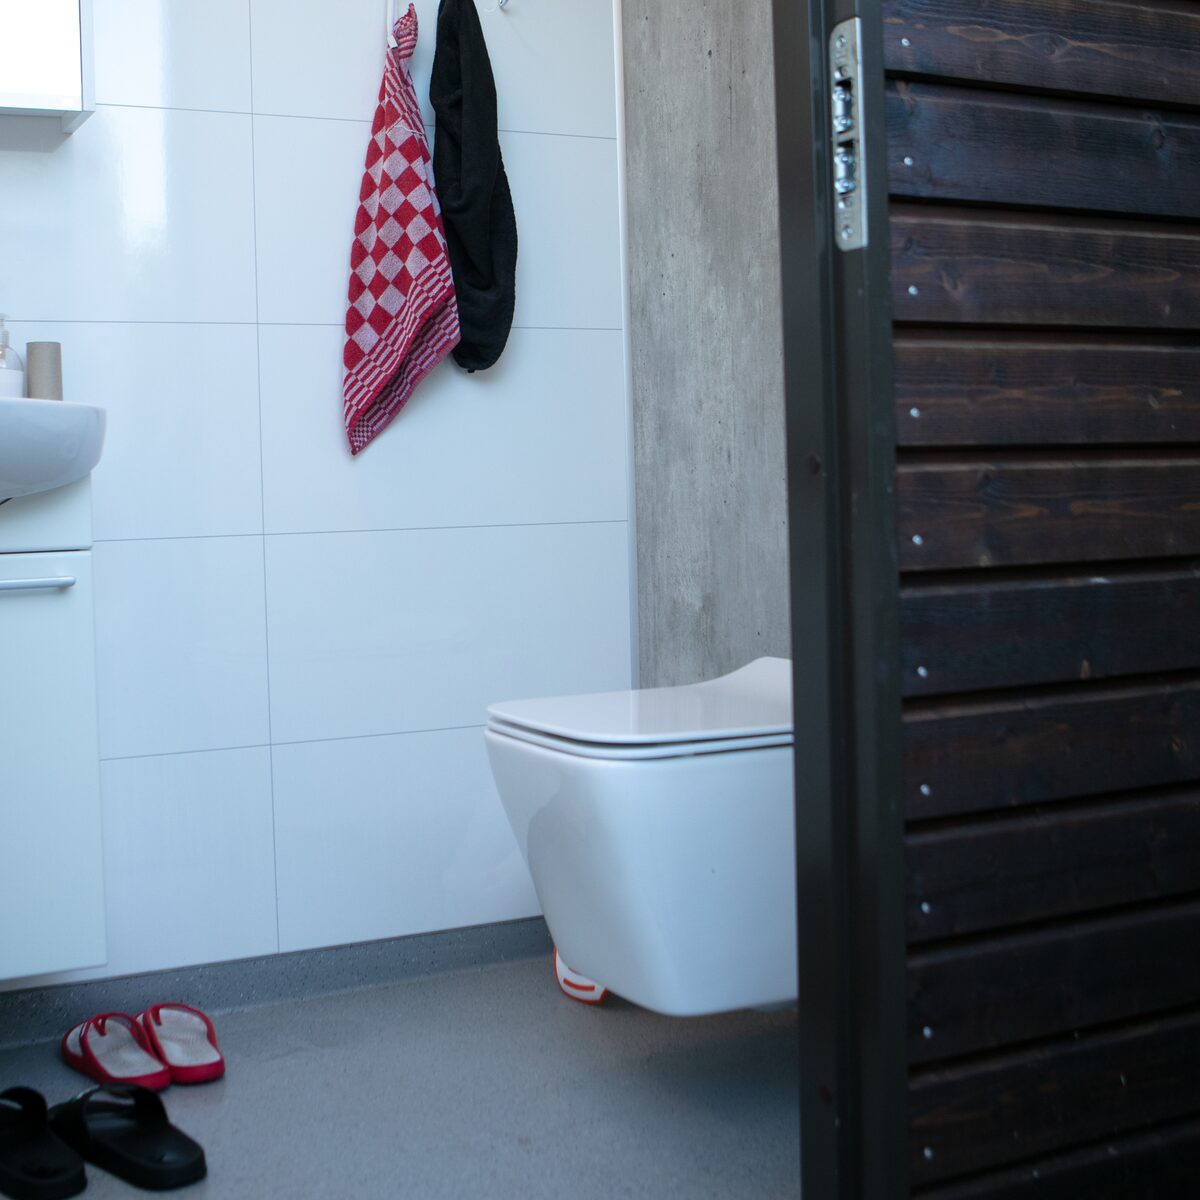 Komfortplätze mit privatem Sanitär in Overijssel